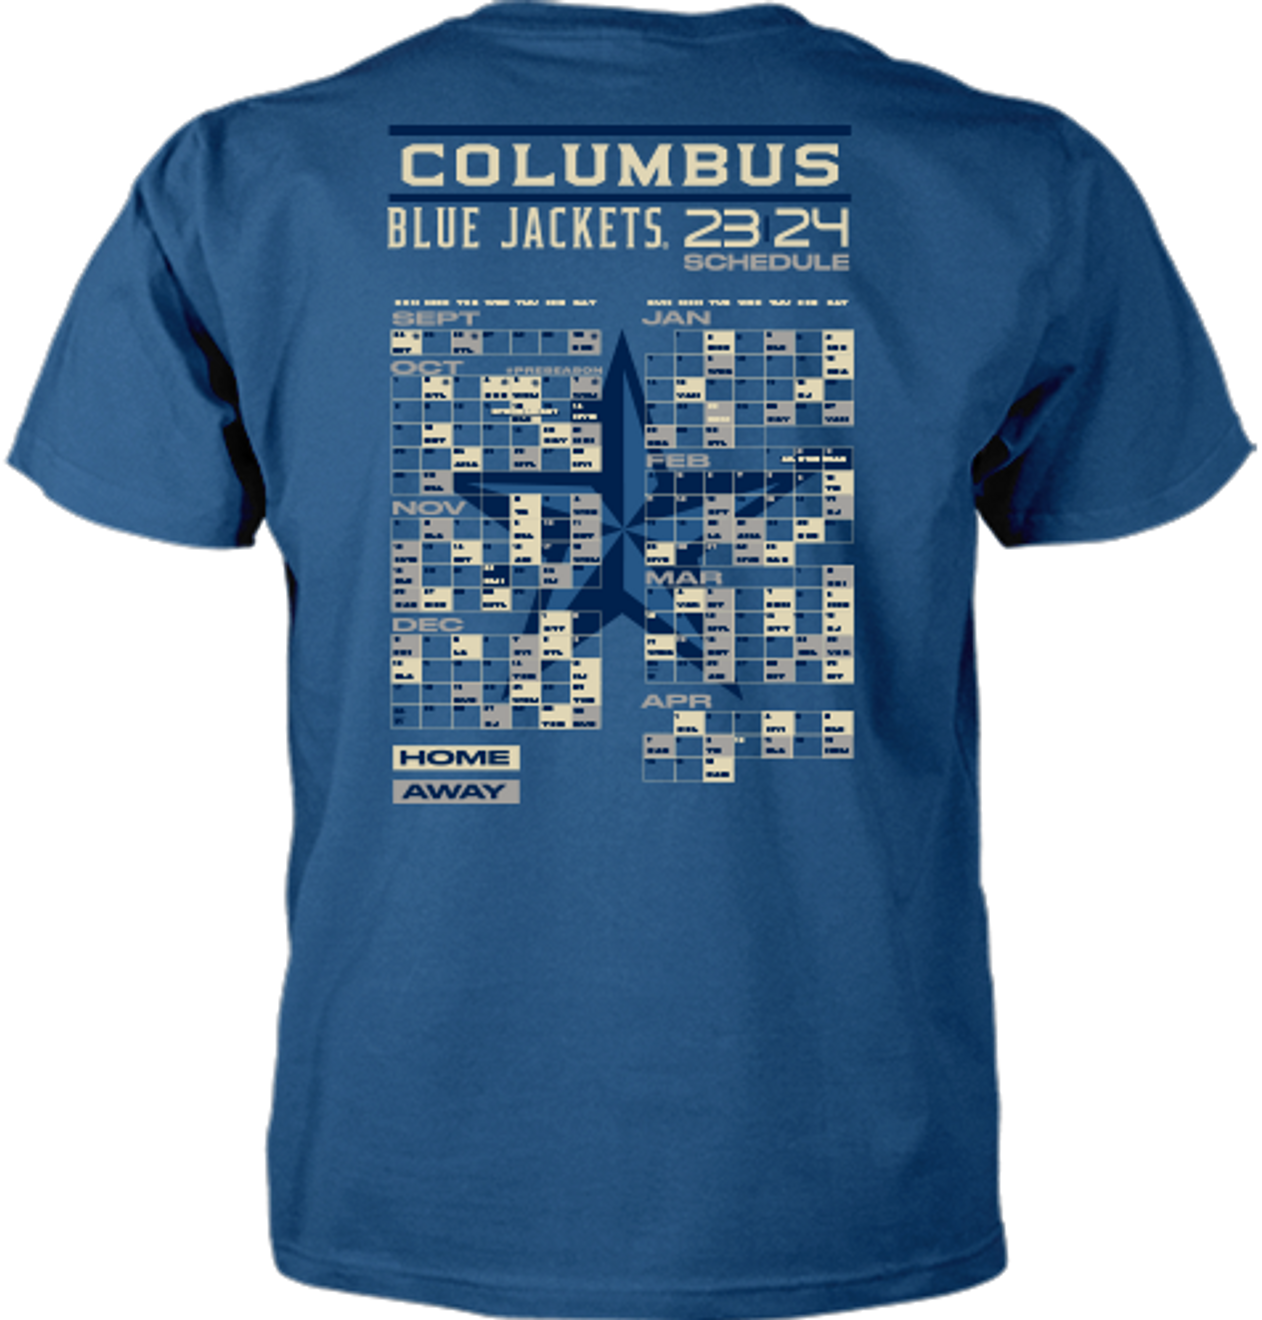 Columbus Blue Jackets Home & Office Goods, Blue Jackets Home Goods